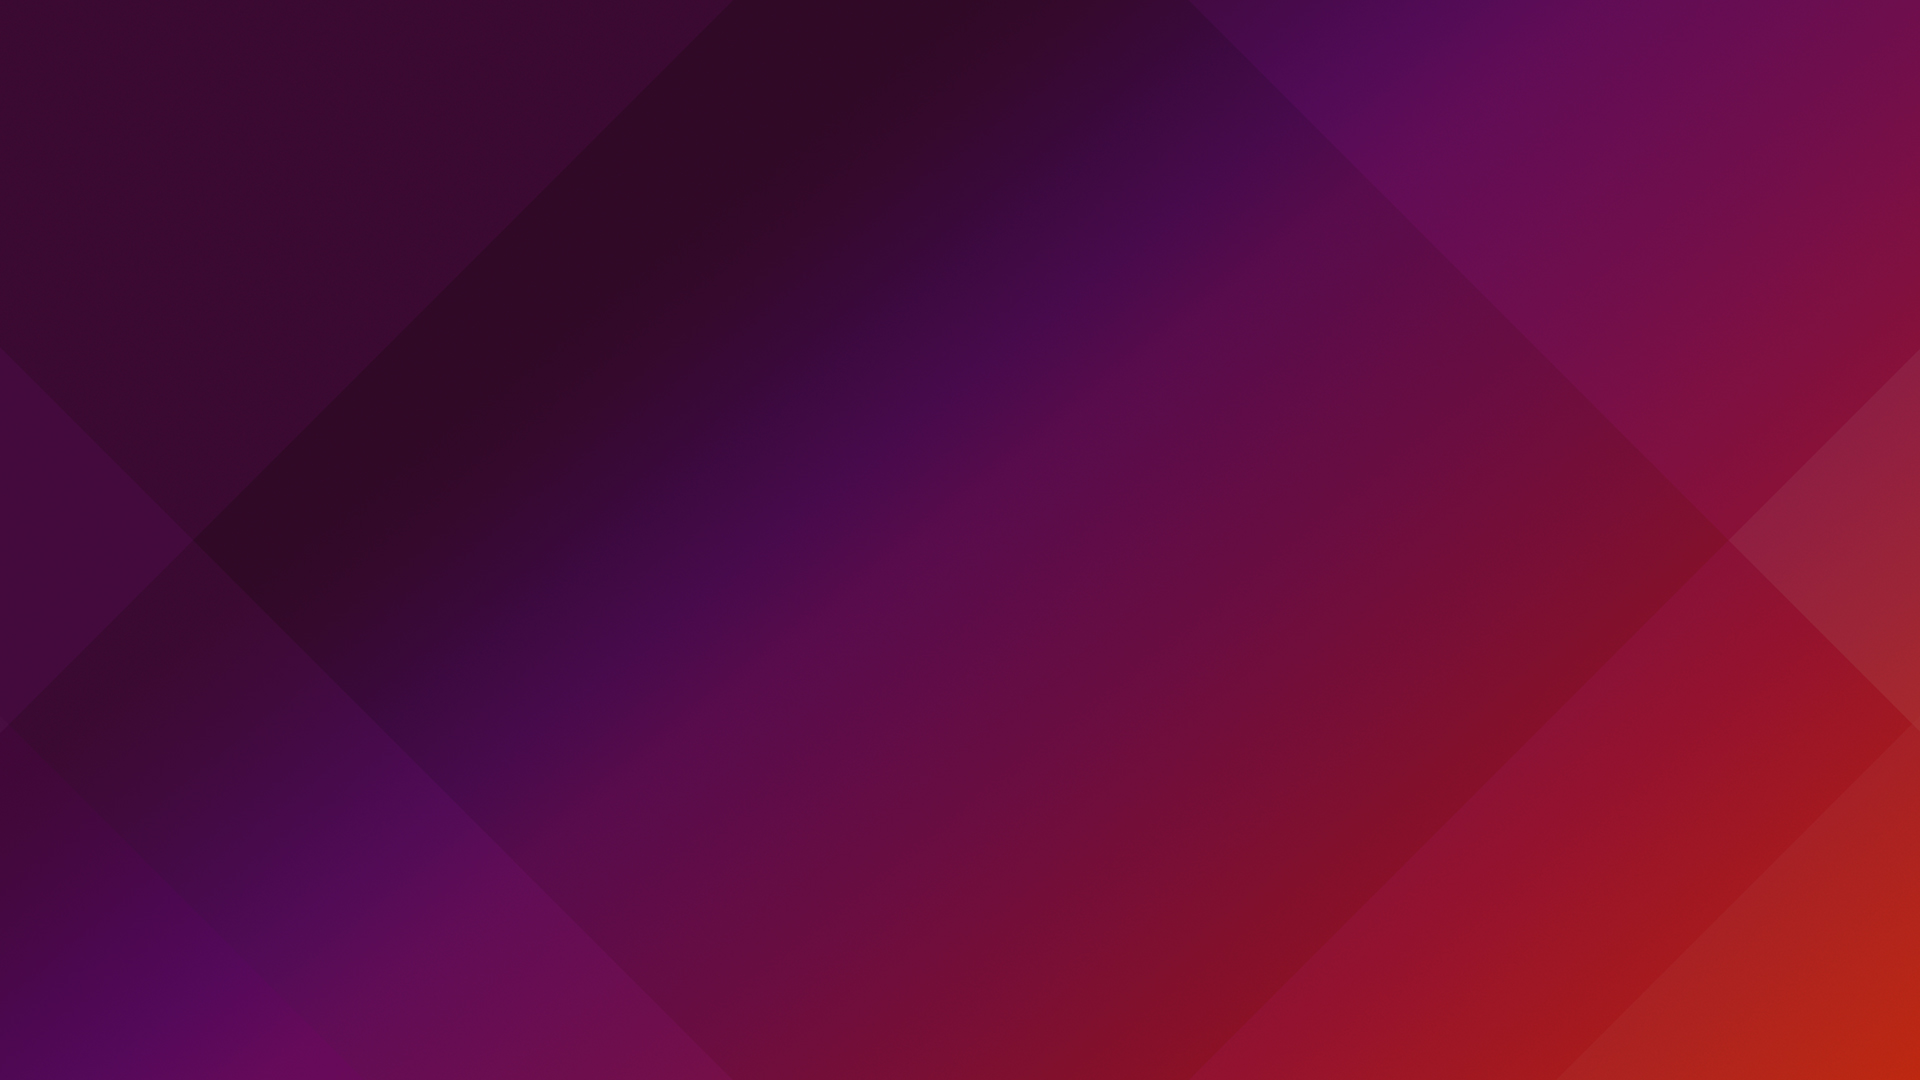 General 1920x1080 Ubuntu abstract colorful digital art simple background gradient minimalism